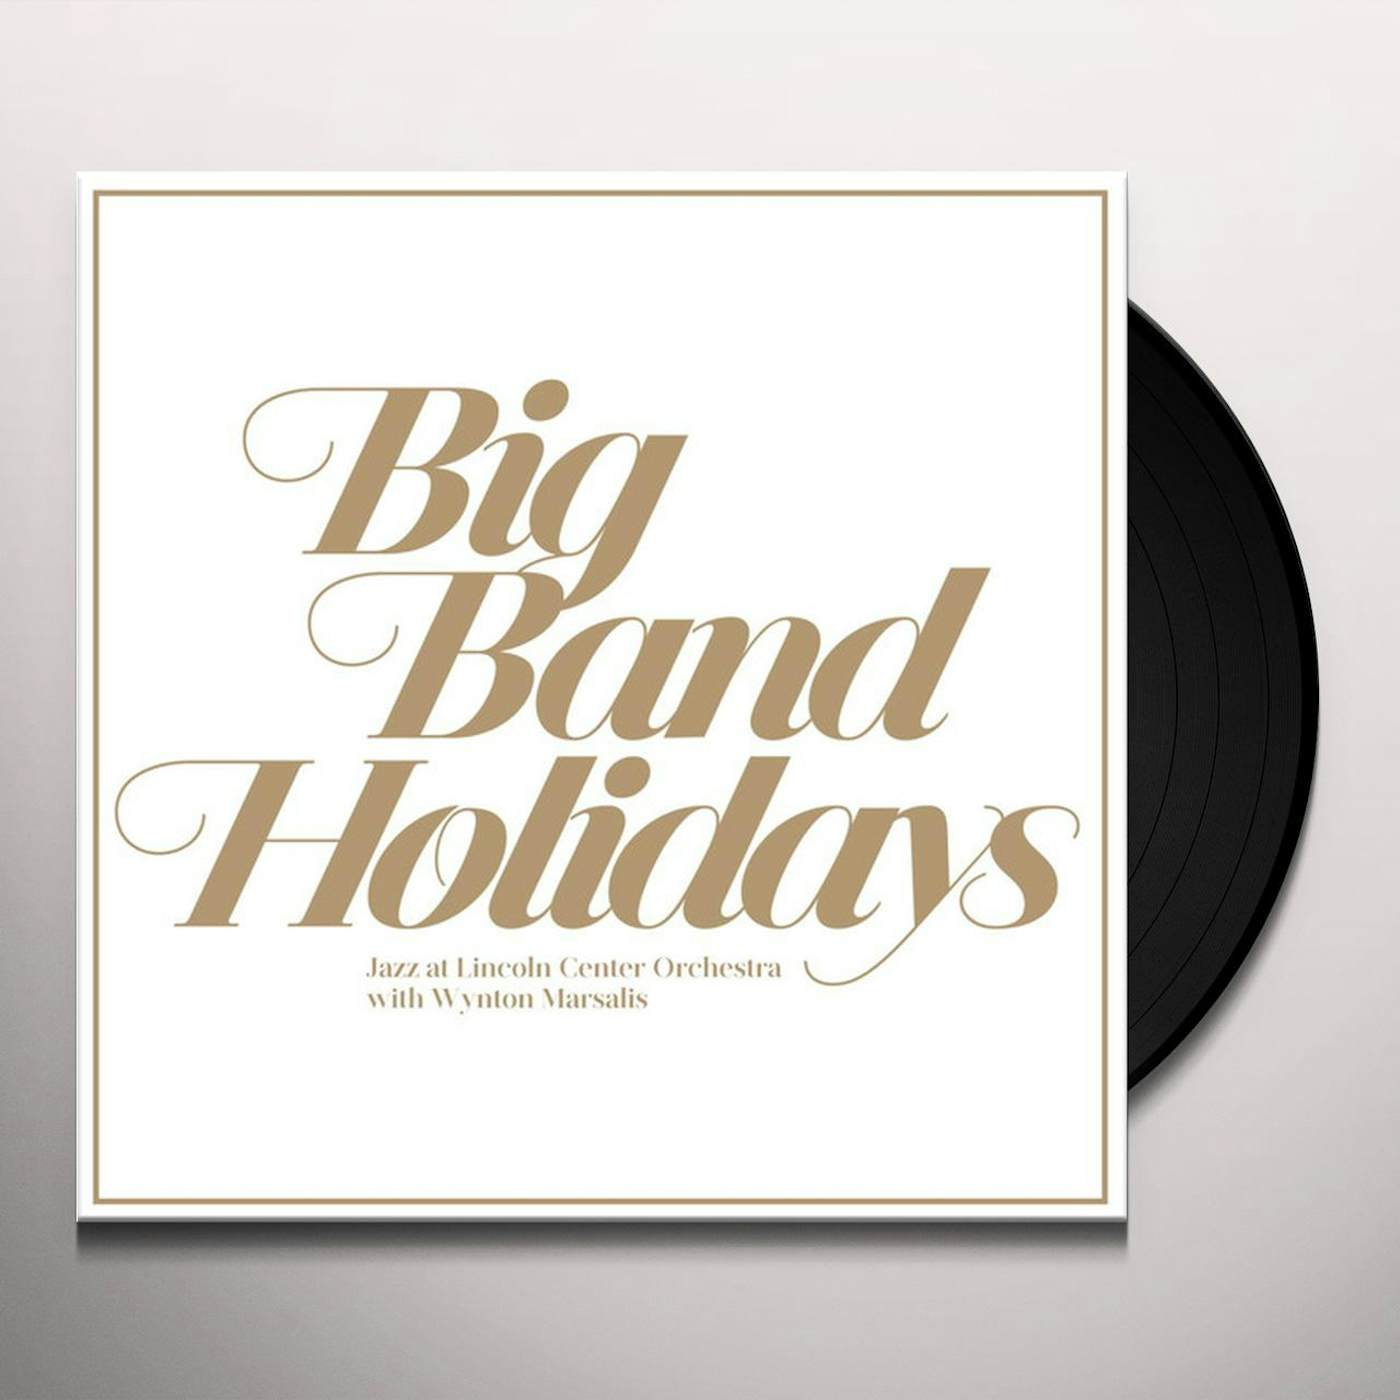 Jazz at Lincoln Center Orchestra with Wynton Marsalis Big Band Holidays Vinyl Record